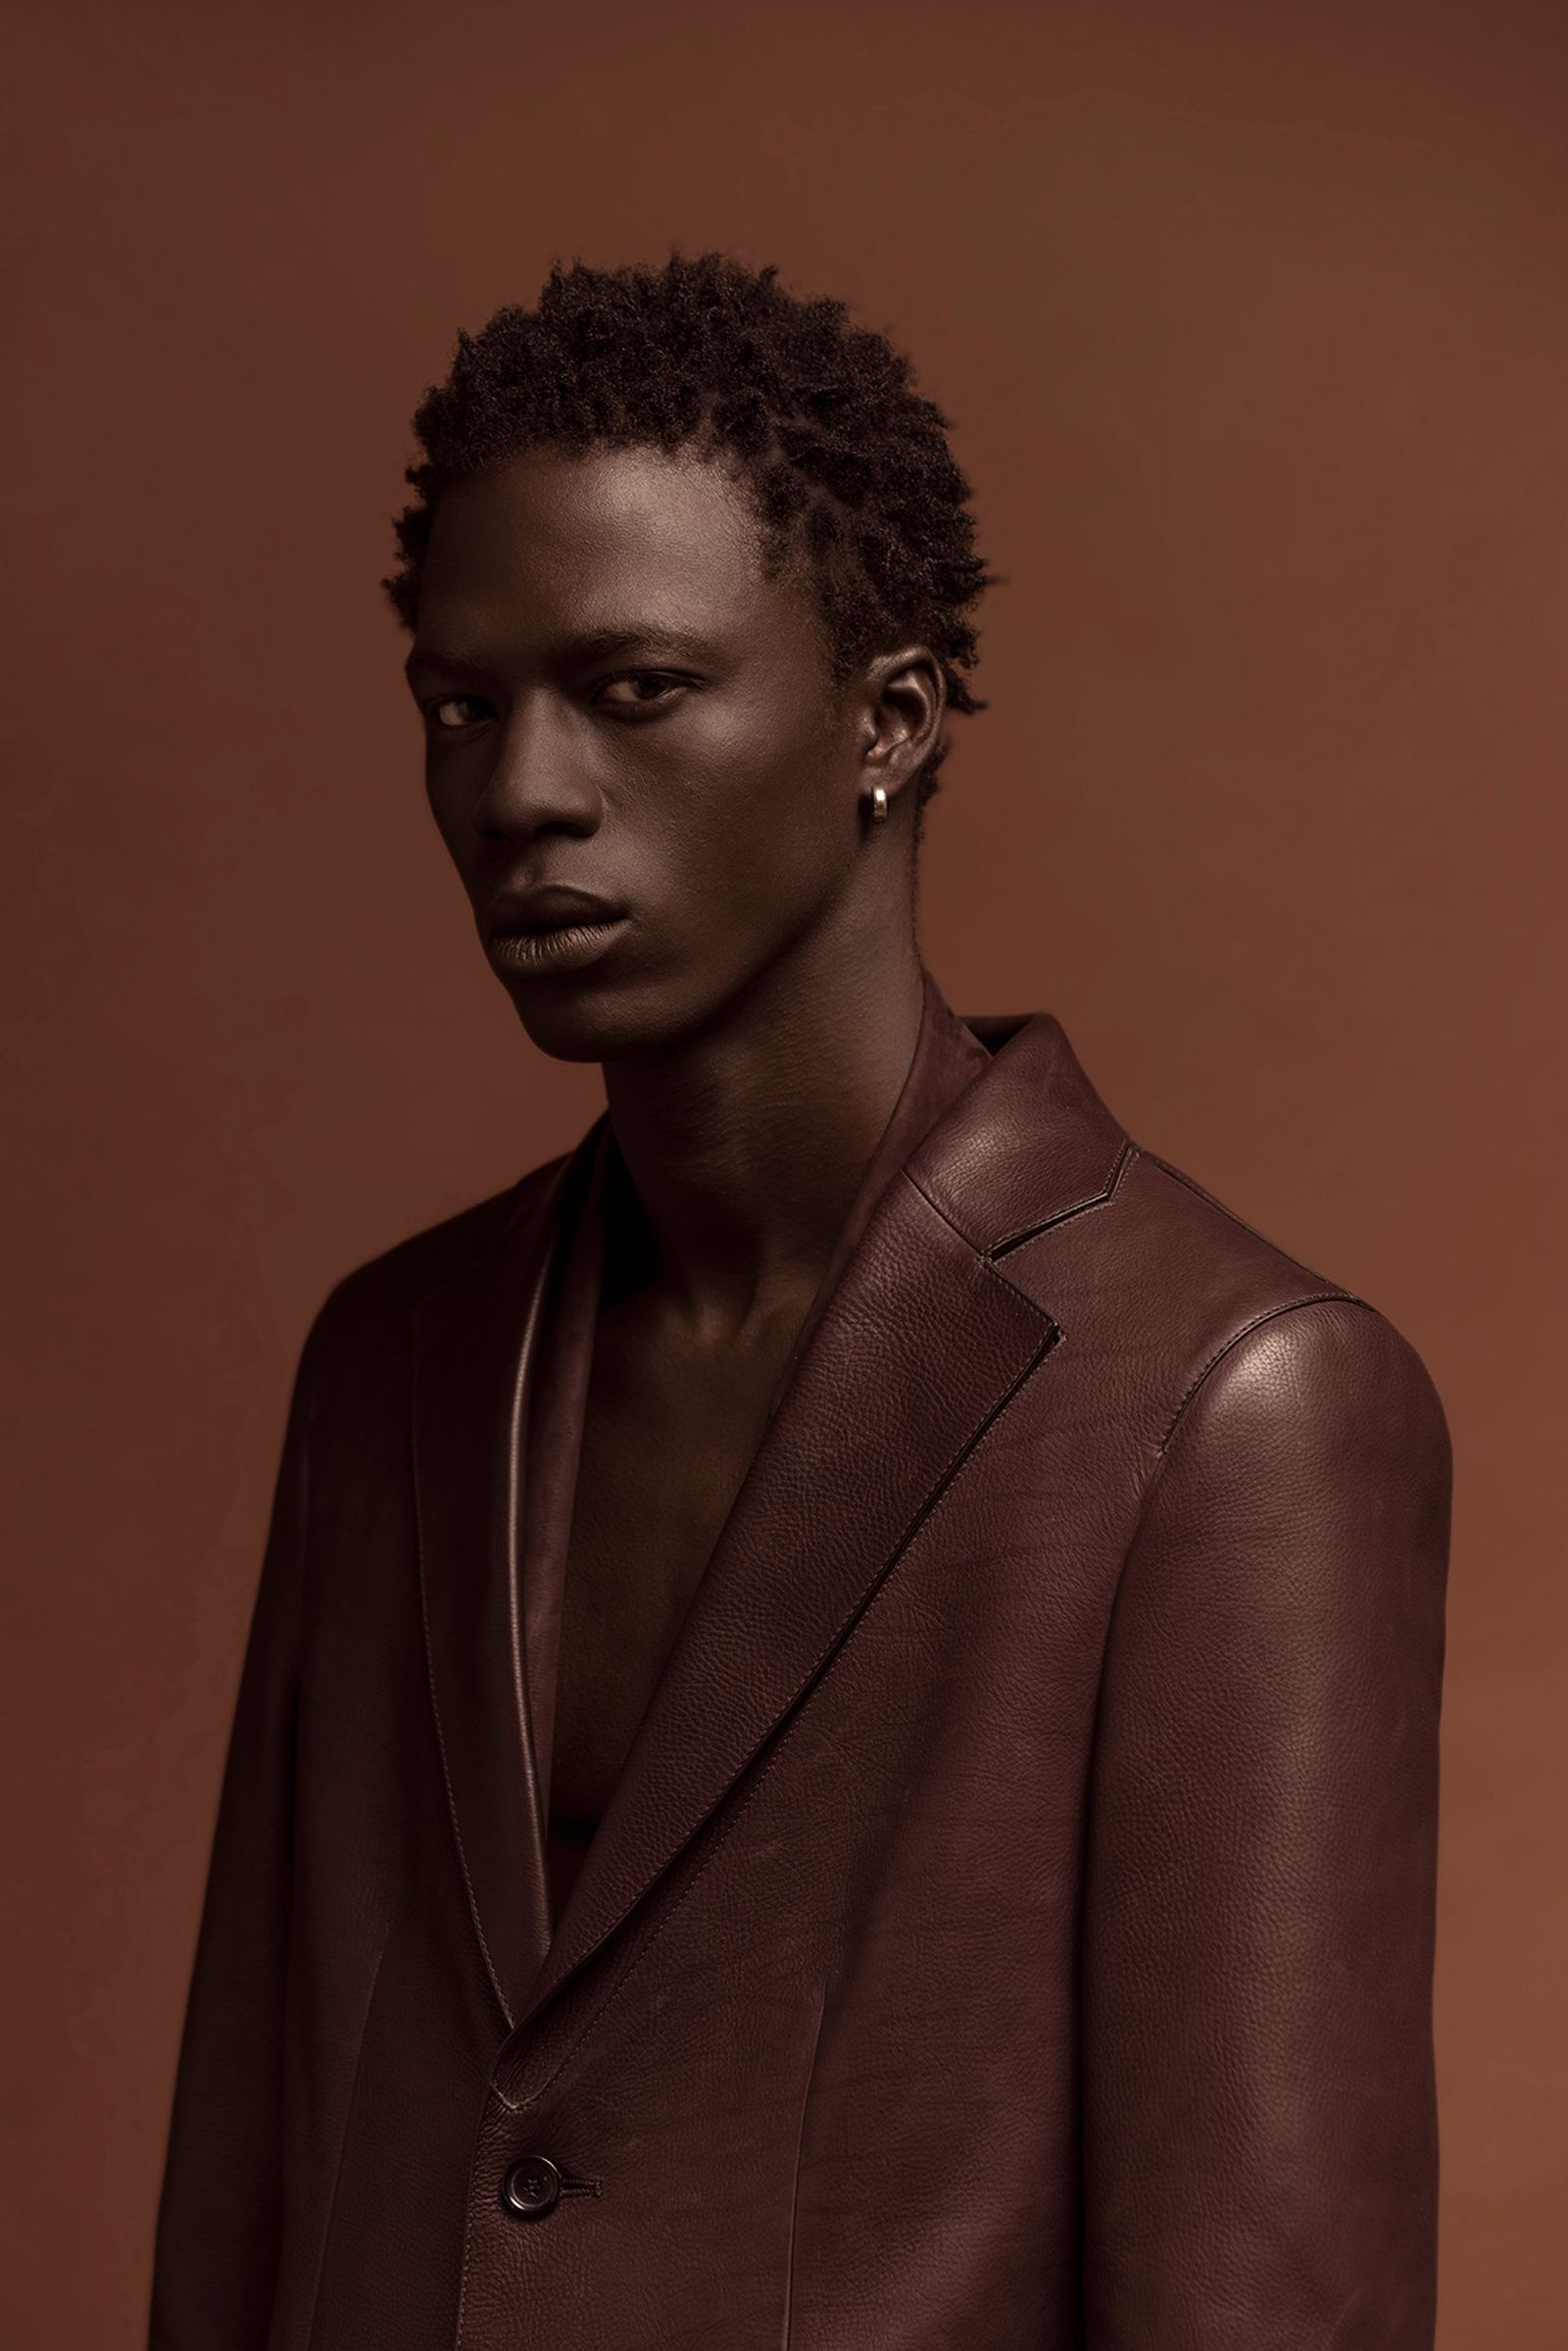 Cherif is wearing Blazer - Louis Vuitton by Virgil Abloh
